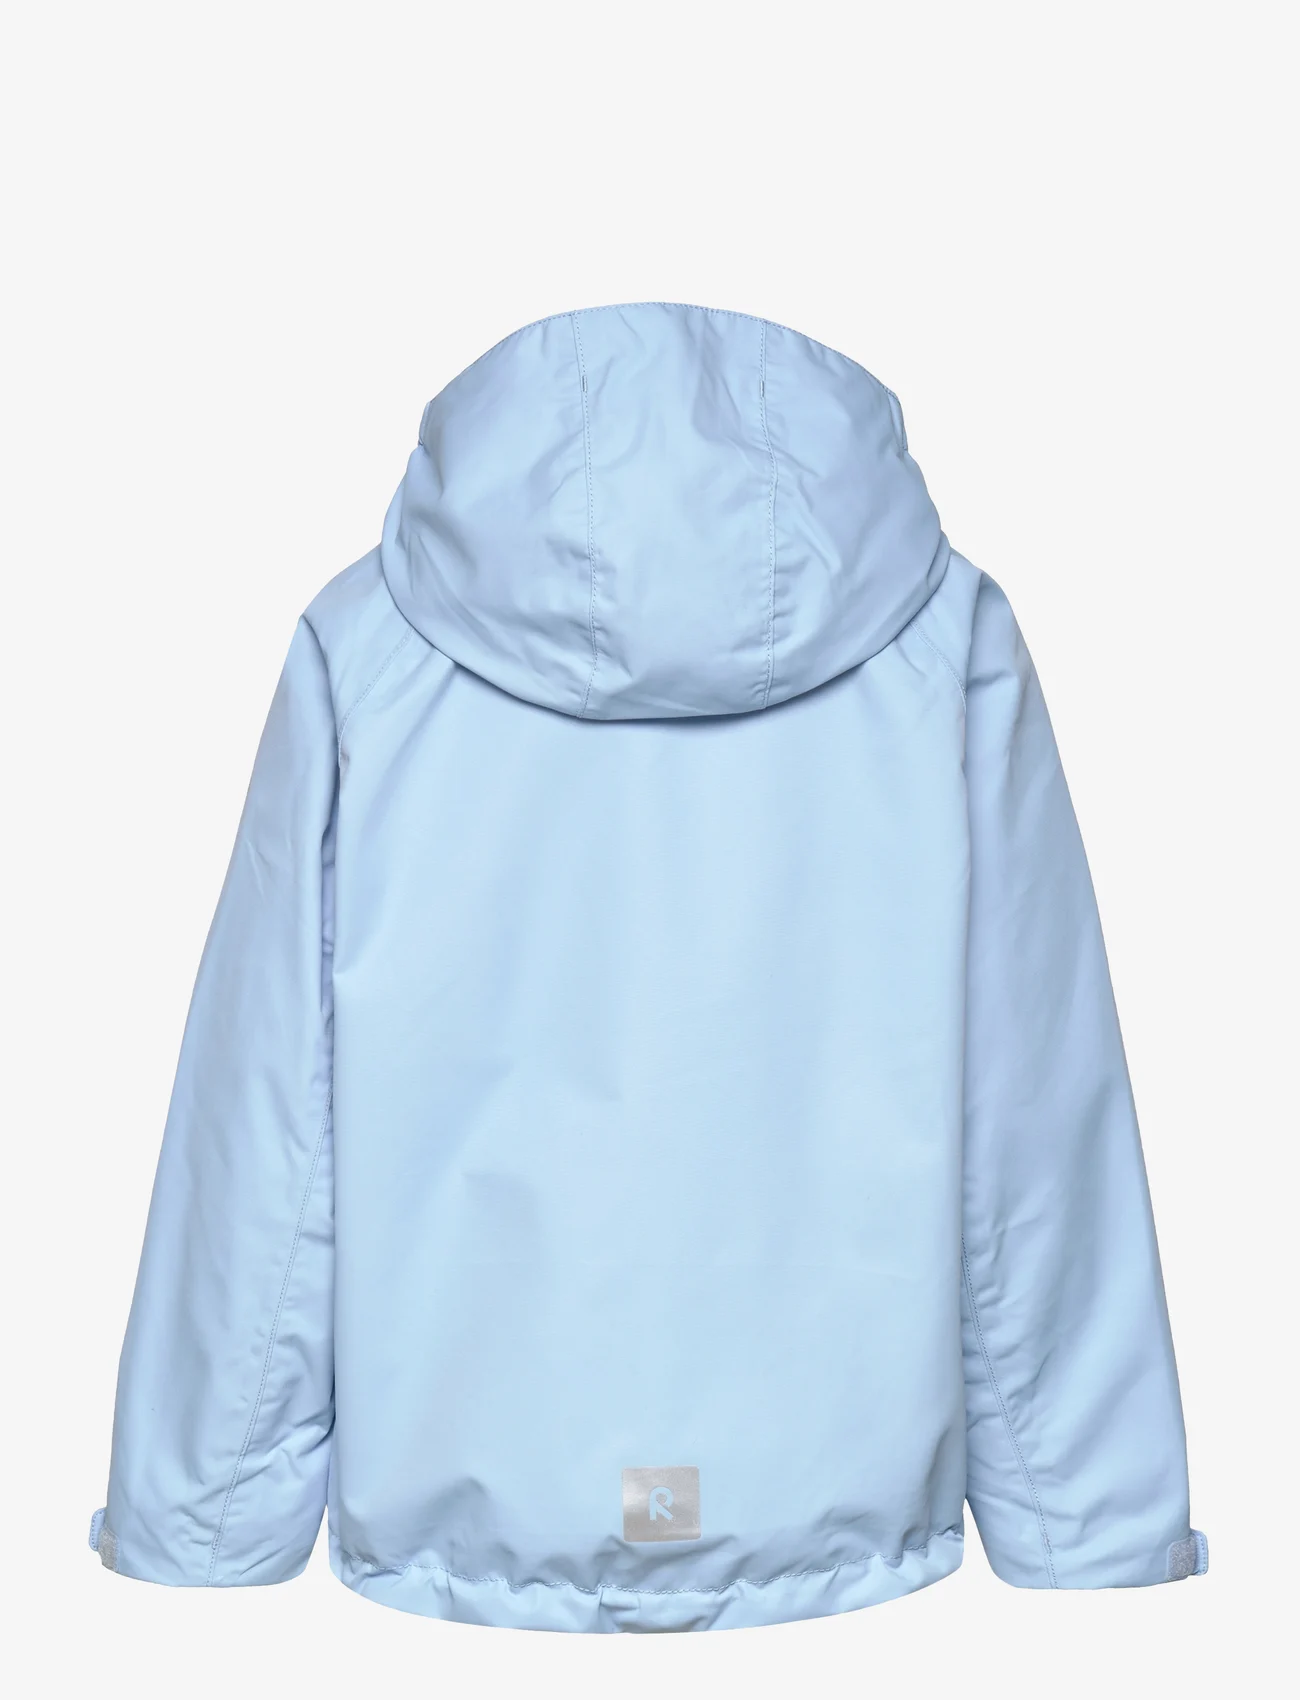 Reima - Reimatec jacket, Soutu - kevättakit - frozen blue - 1